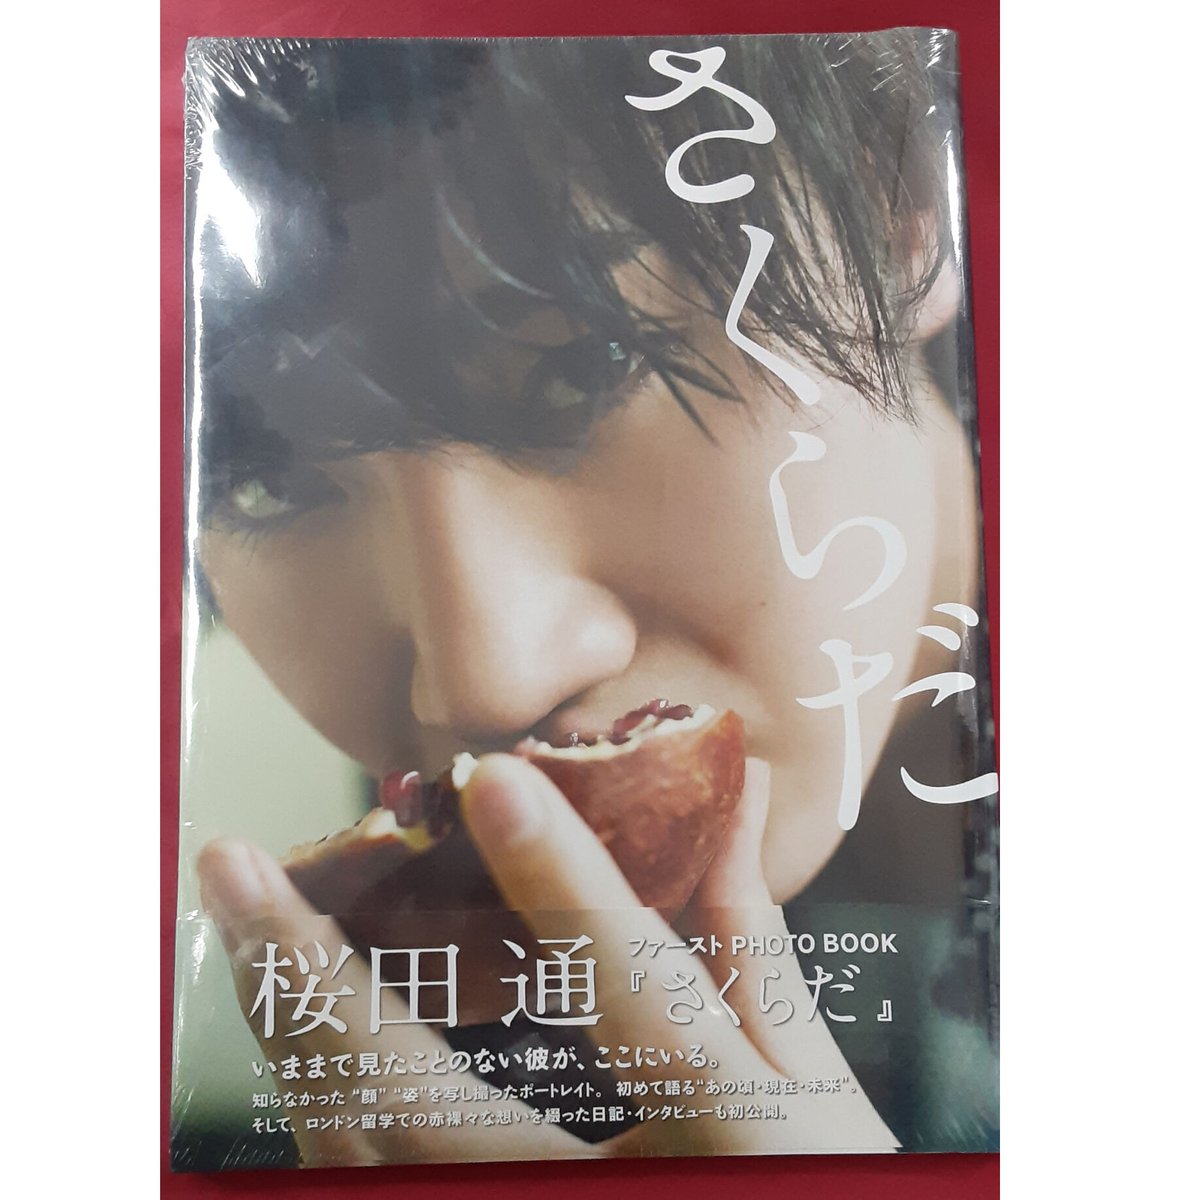 桜田通 PHOTOBOOK & CD | www.150.illinois.edu